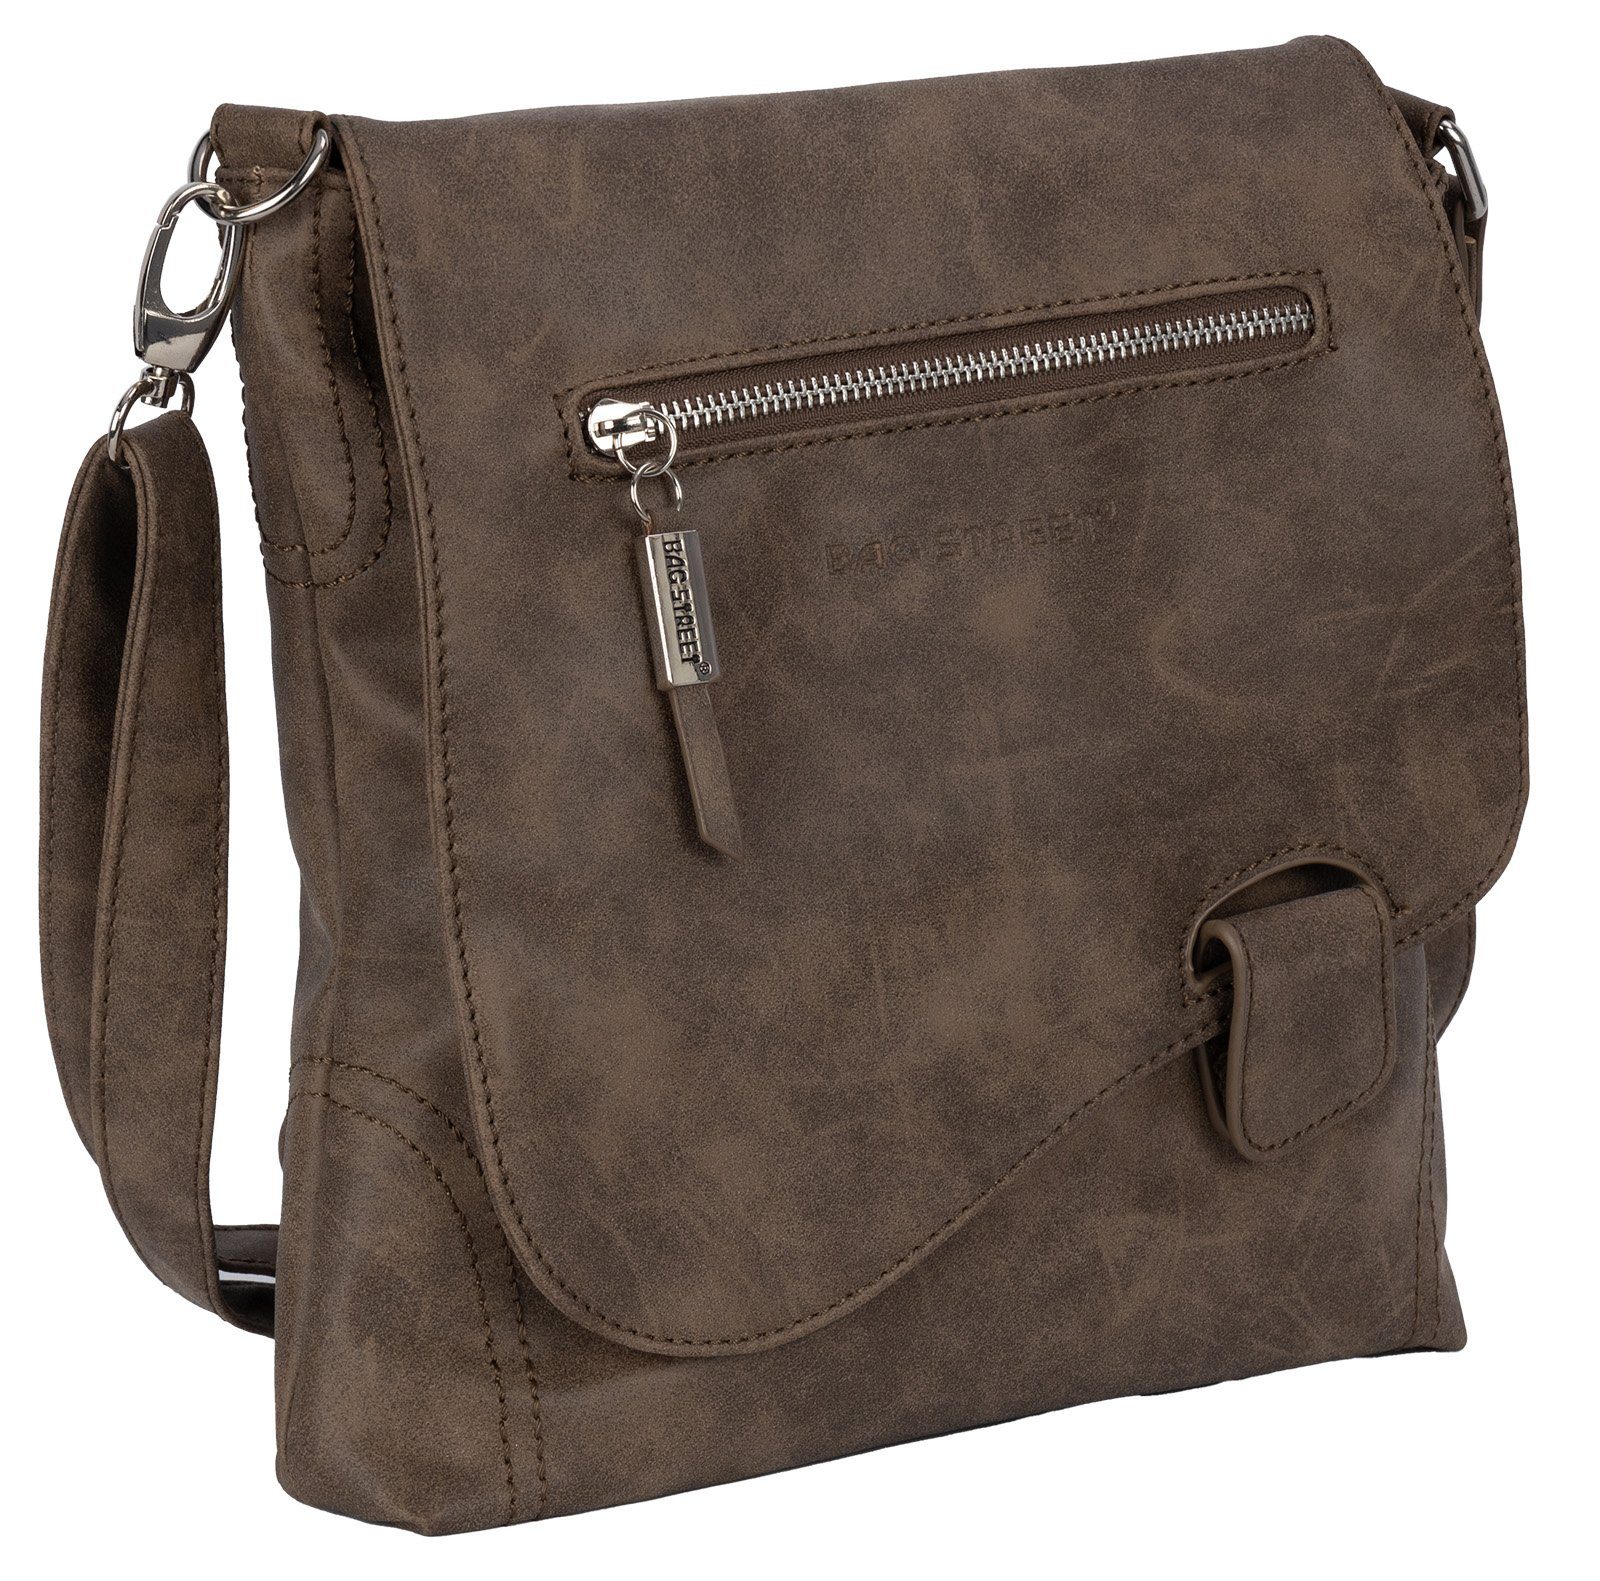 BAG STREET Schlüsseltasche Bag Street Damentasche Umhängetasche Handtasche Schultertasche T0104, als Schultertasche, Umhängetasche tragbar BRAUN